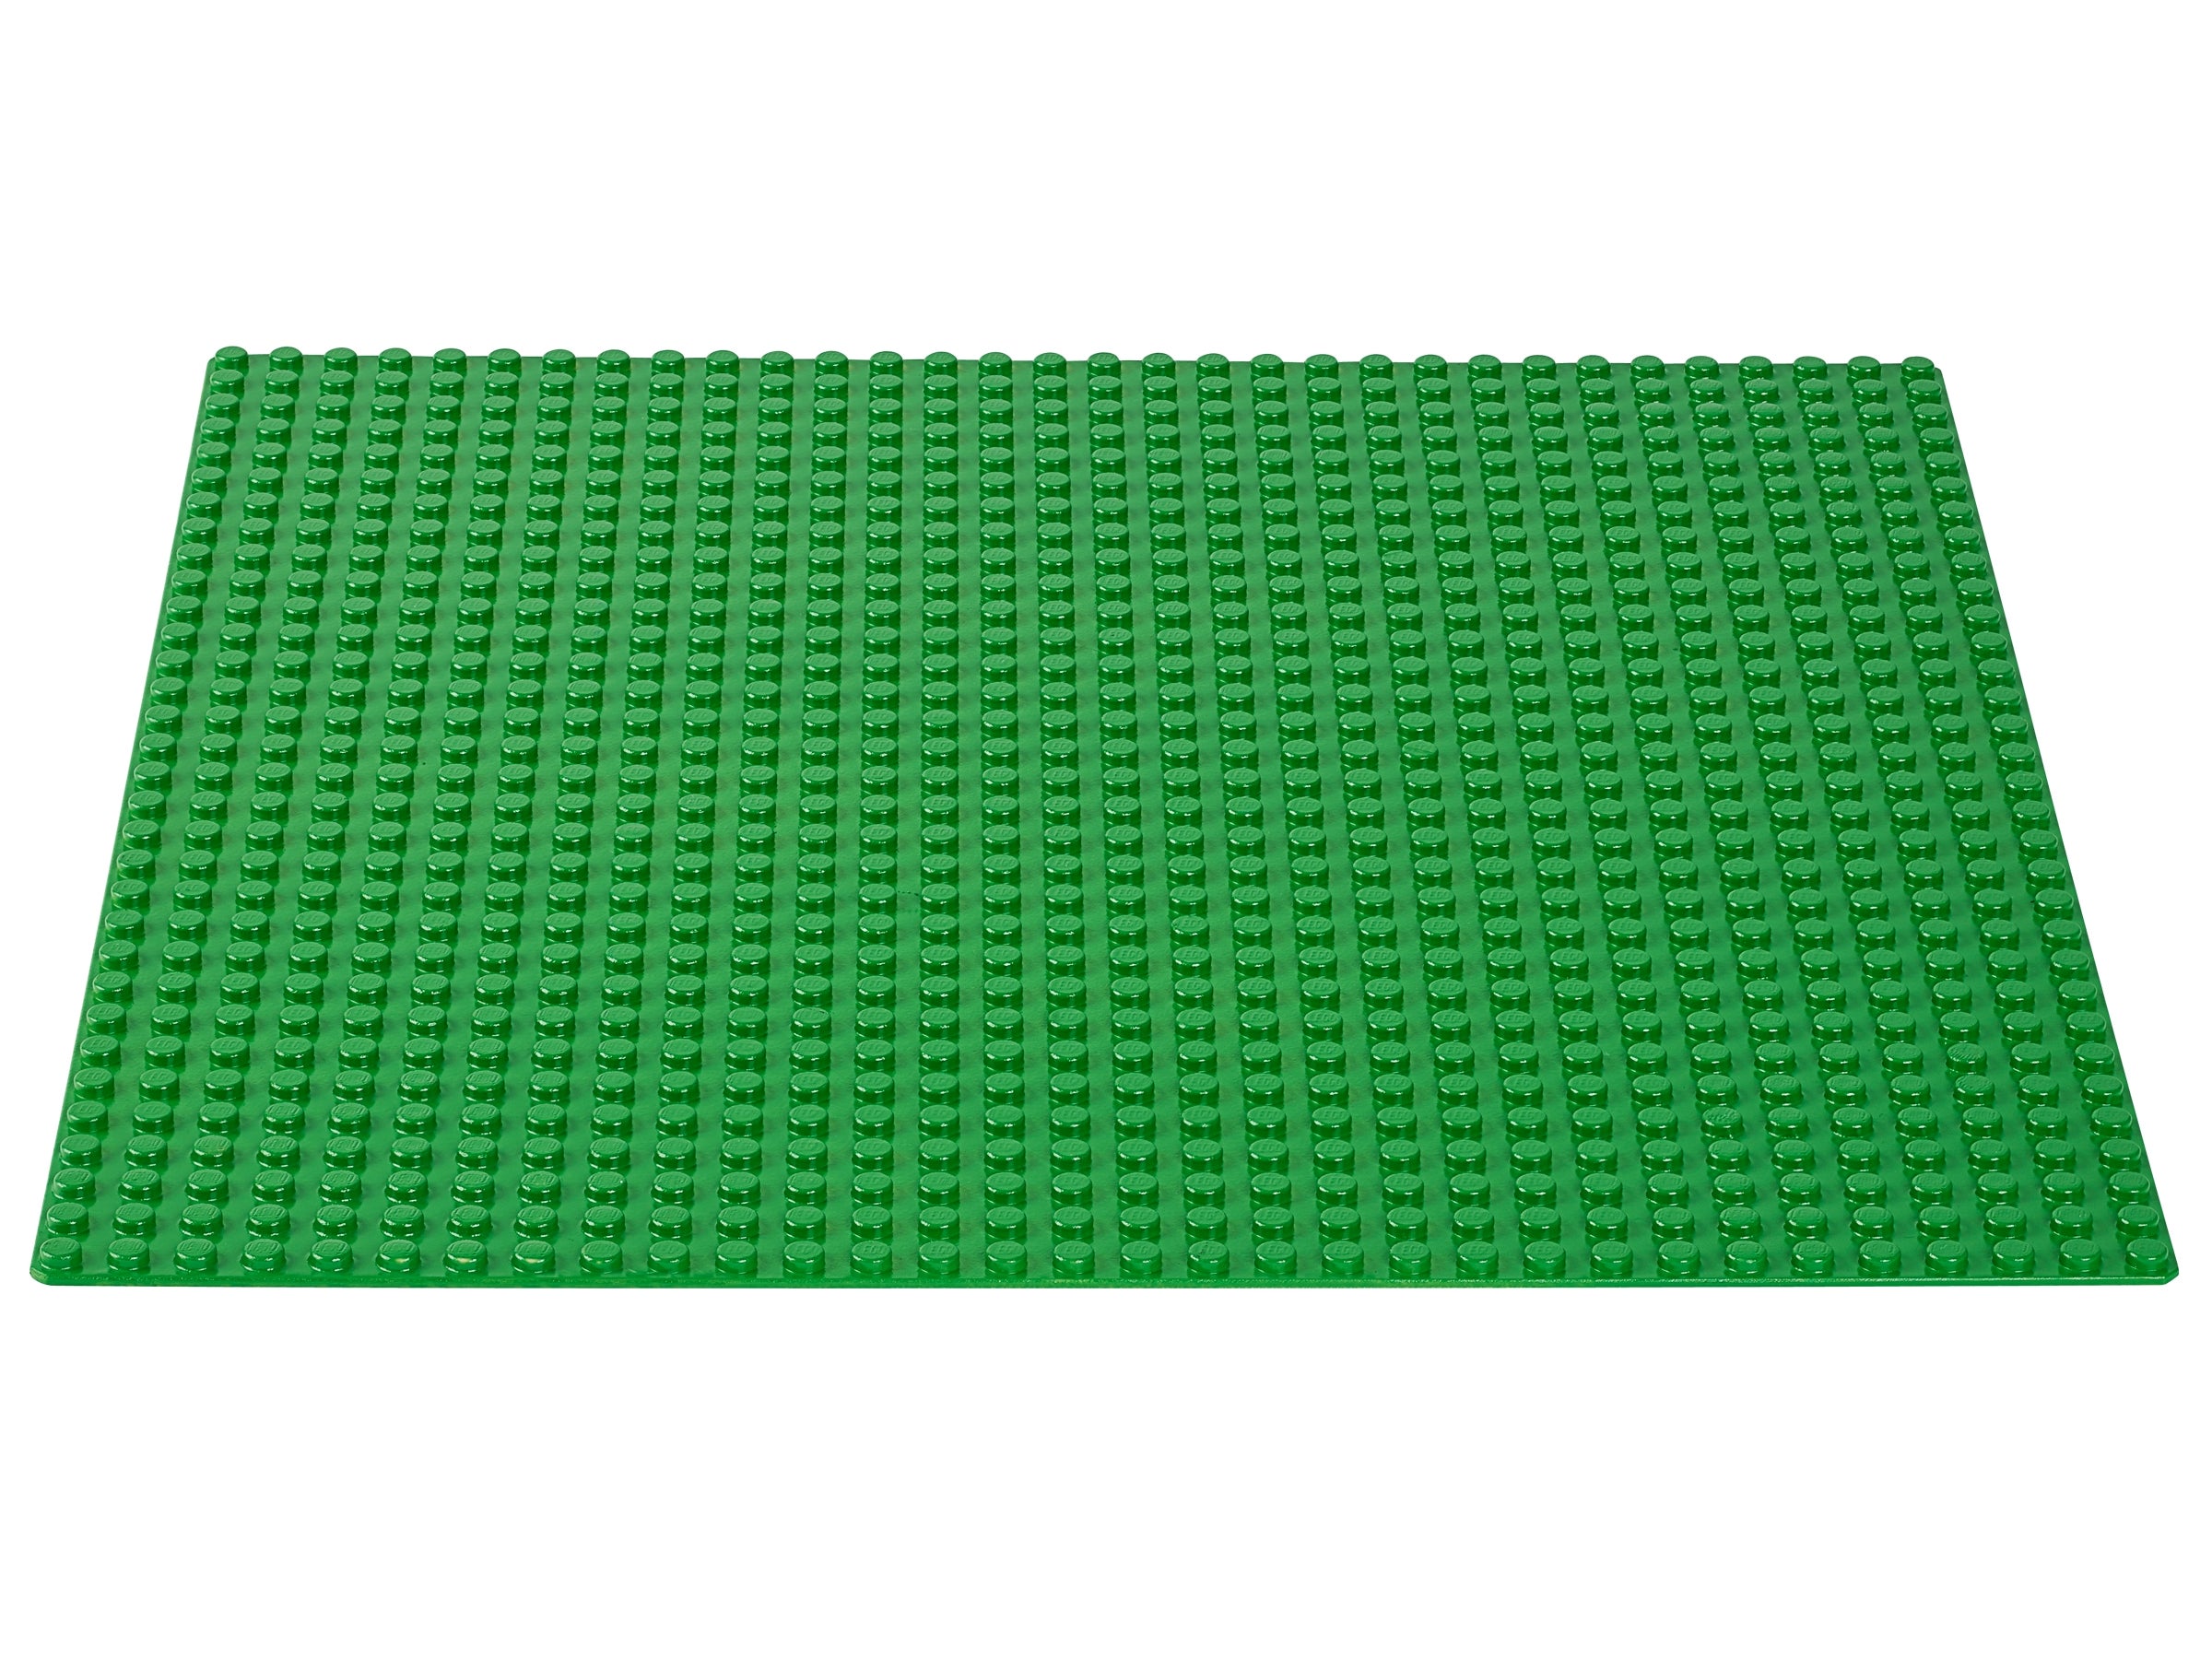 Lego Classic 10700 Placa Base Verde Plana 25cm X 25cm edificio plataforma 32 Stud